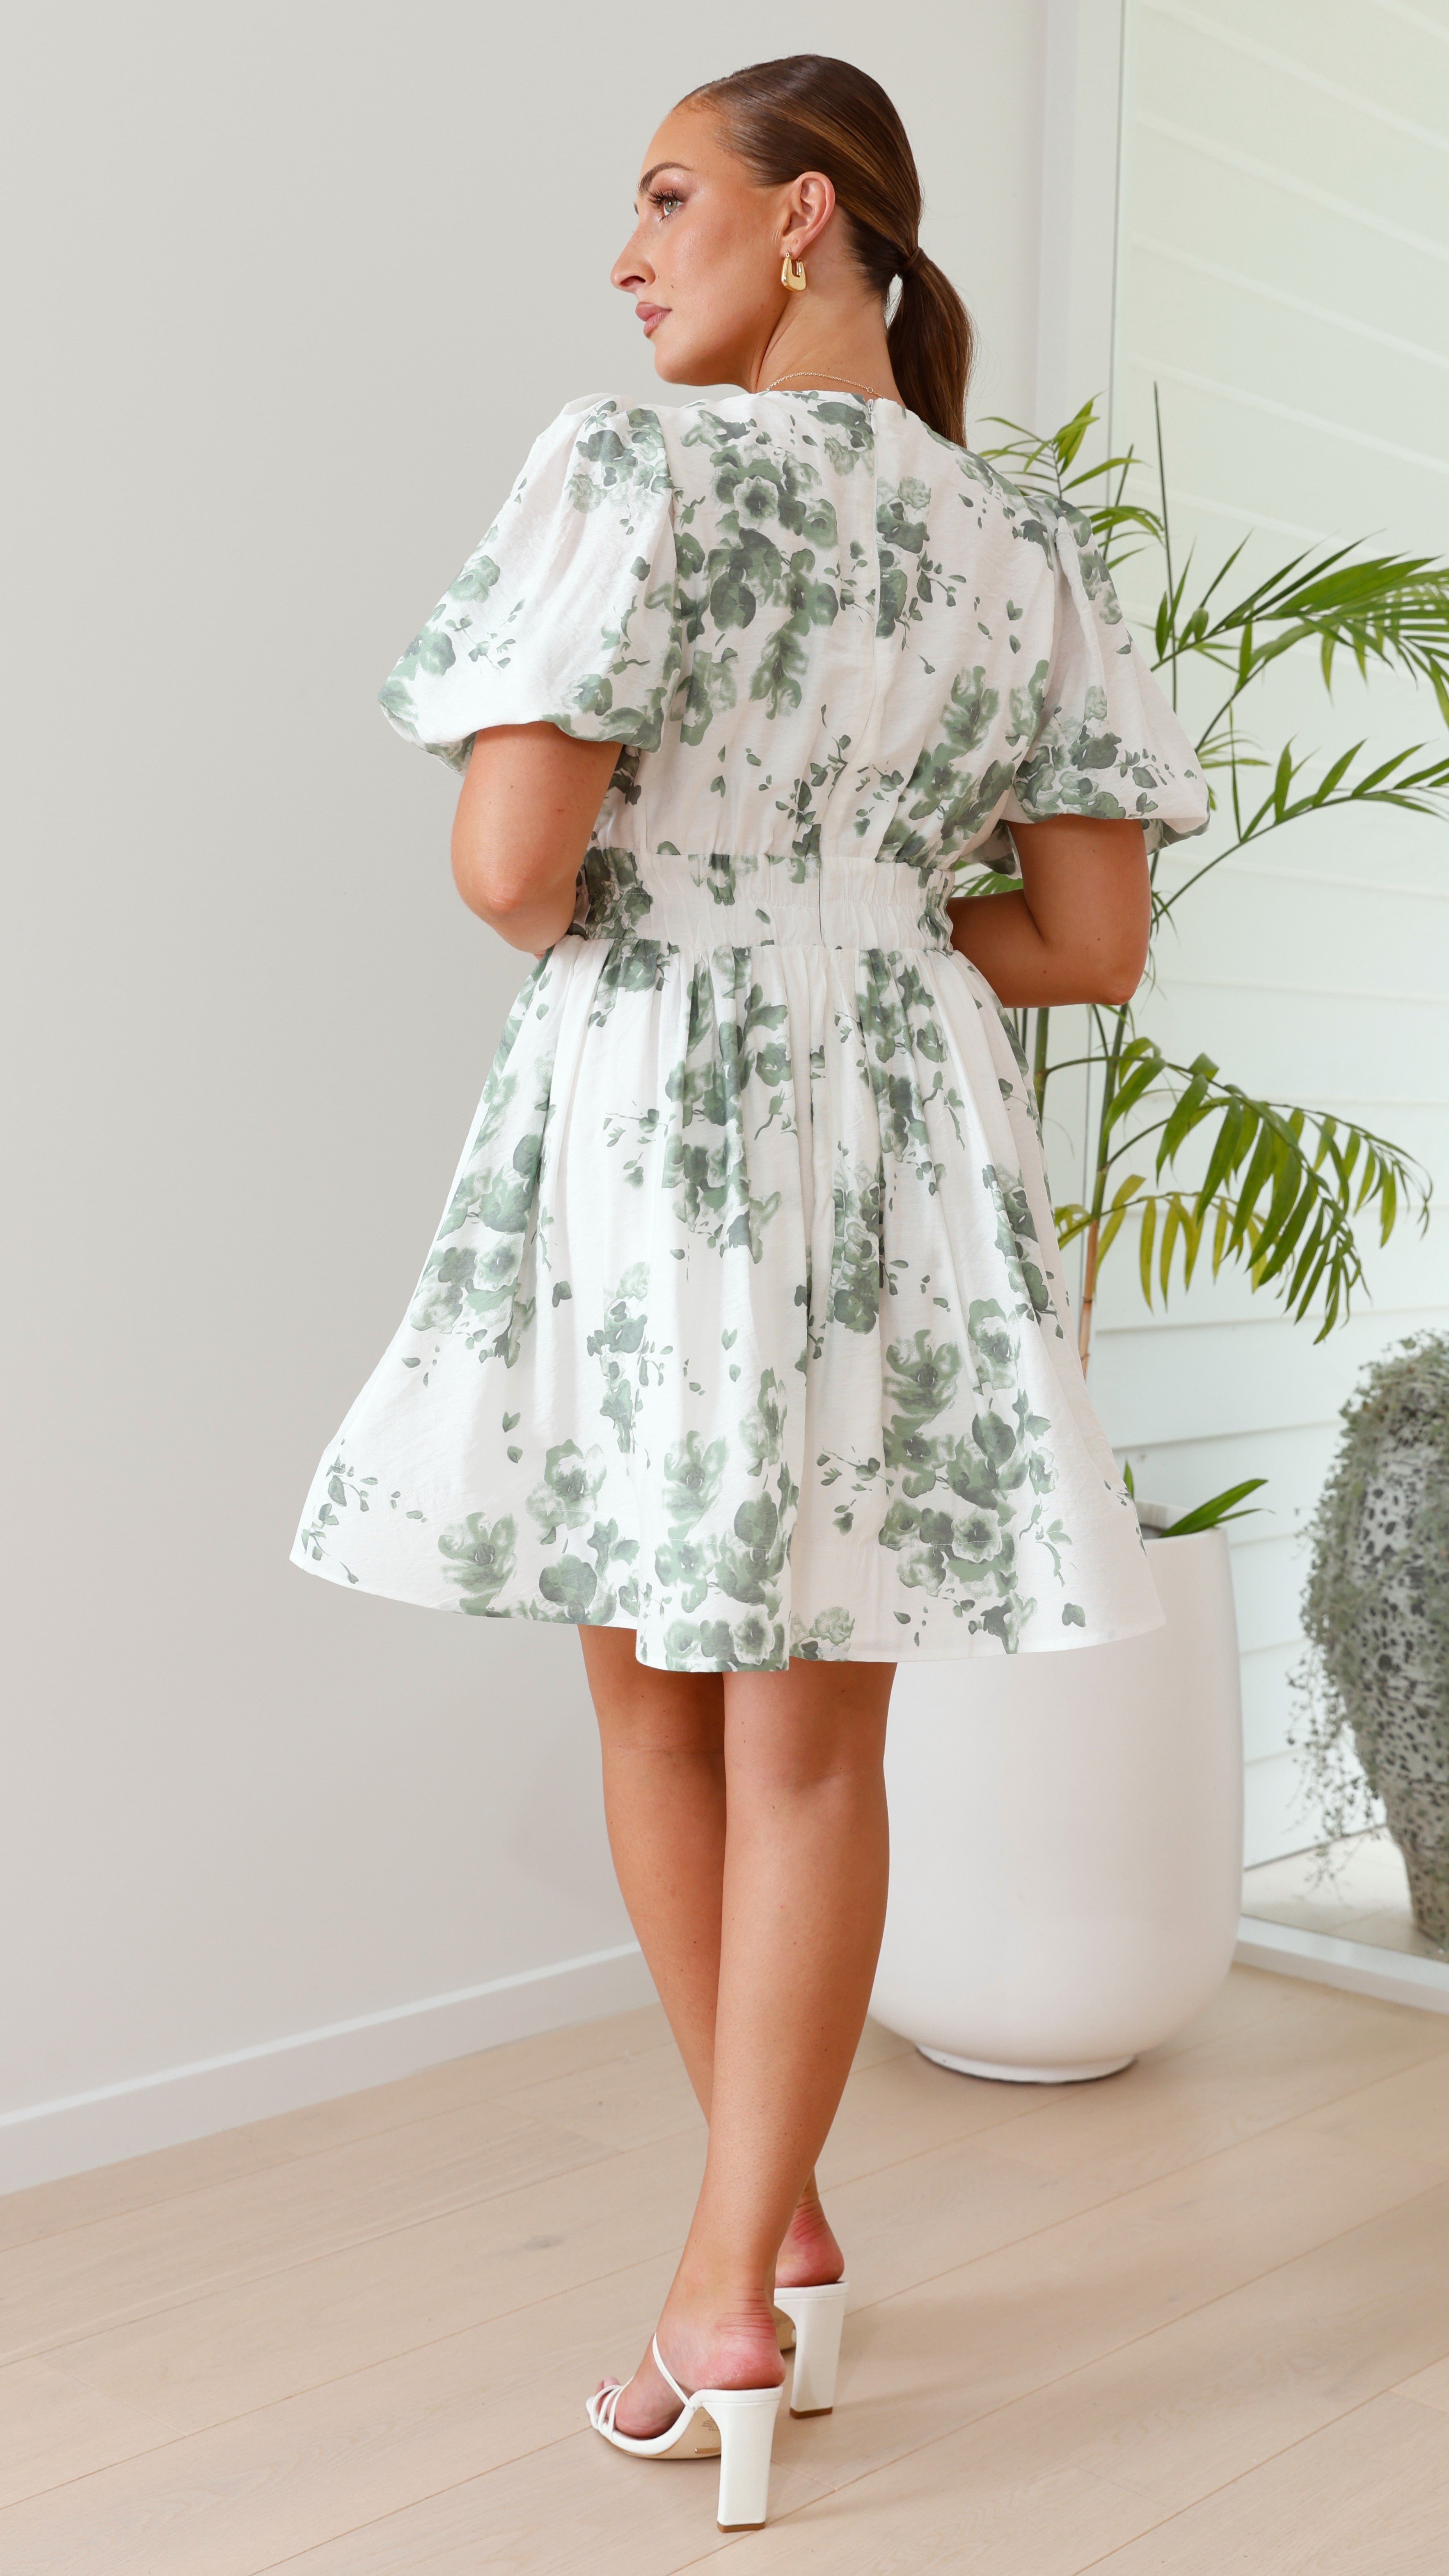 Erin Mini Dress - Green/White Floral